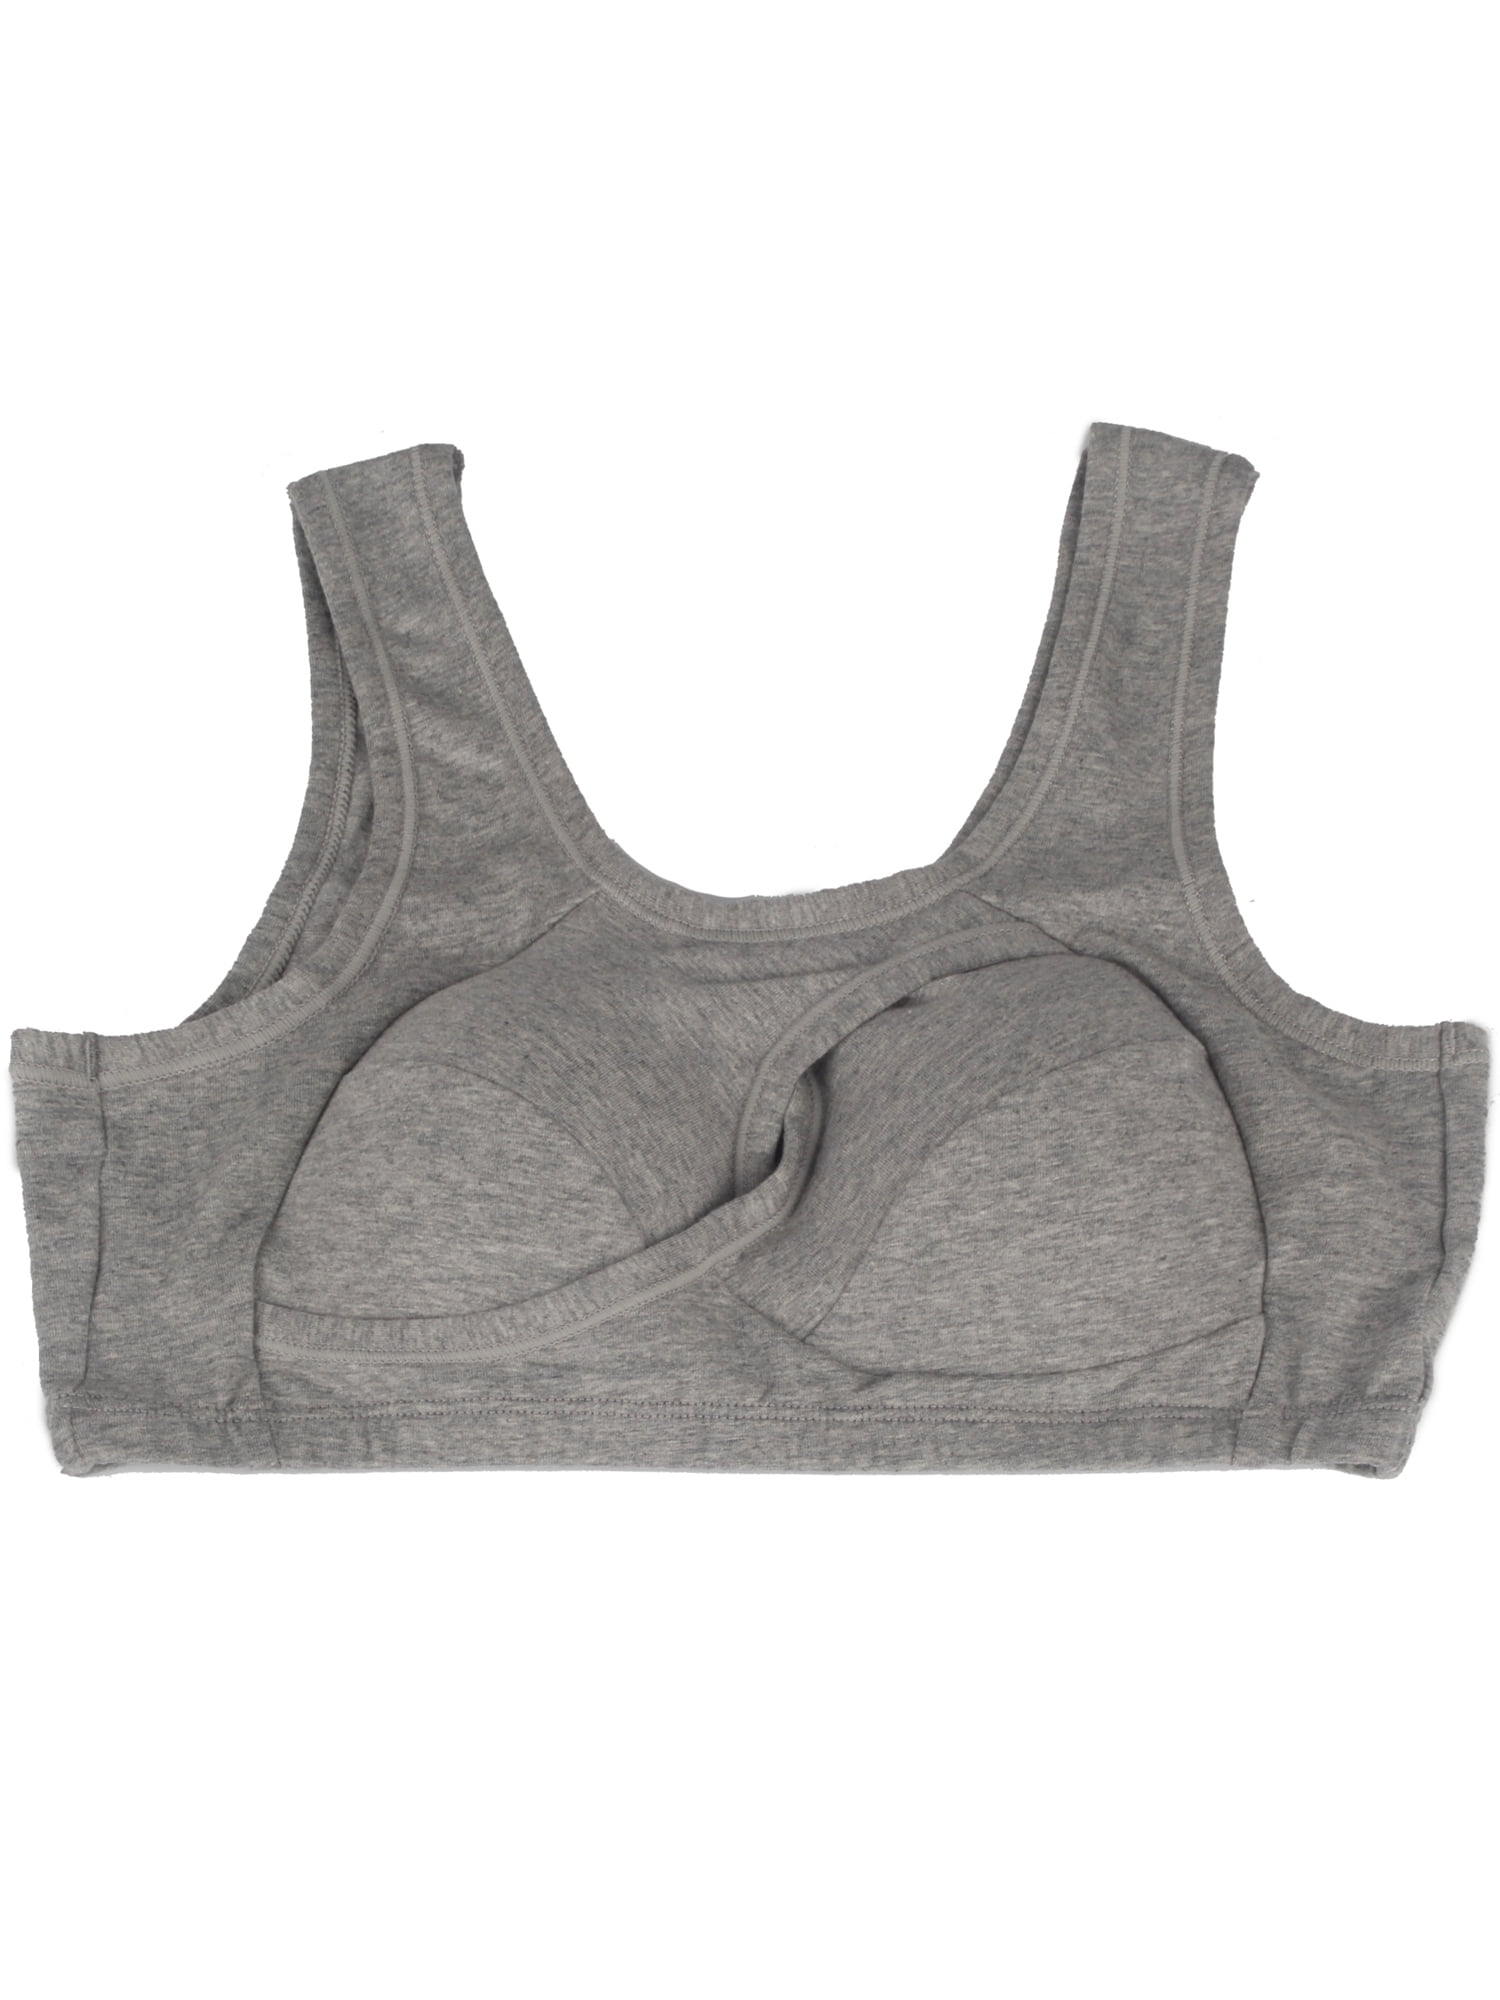 LELINTA Women's Breathable Cotton Racerback Sports Bra High Impact Support Workout  Yoga Bra Size M-L 